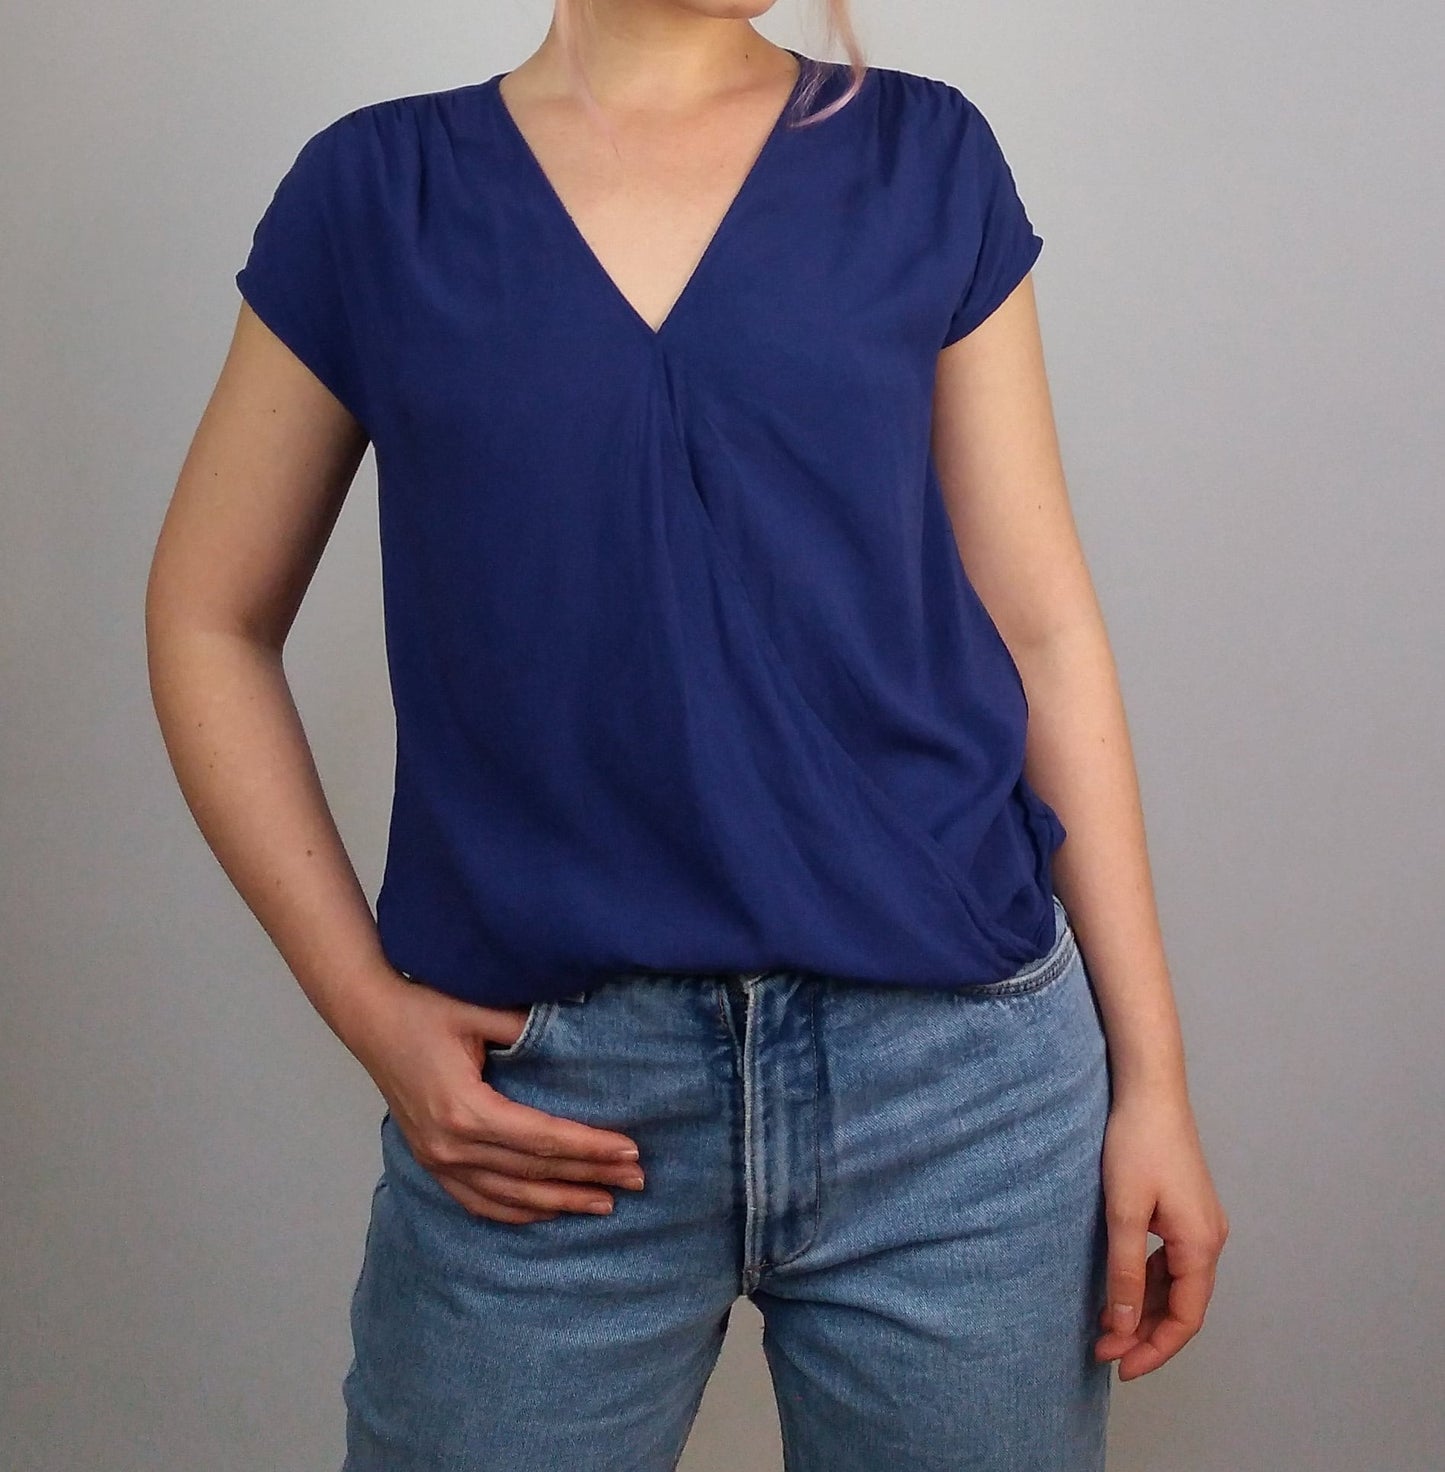 AHLENS blue viscose top wrap blouse | Size XS-S